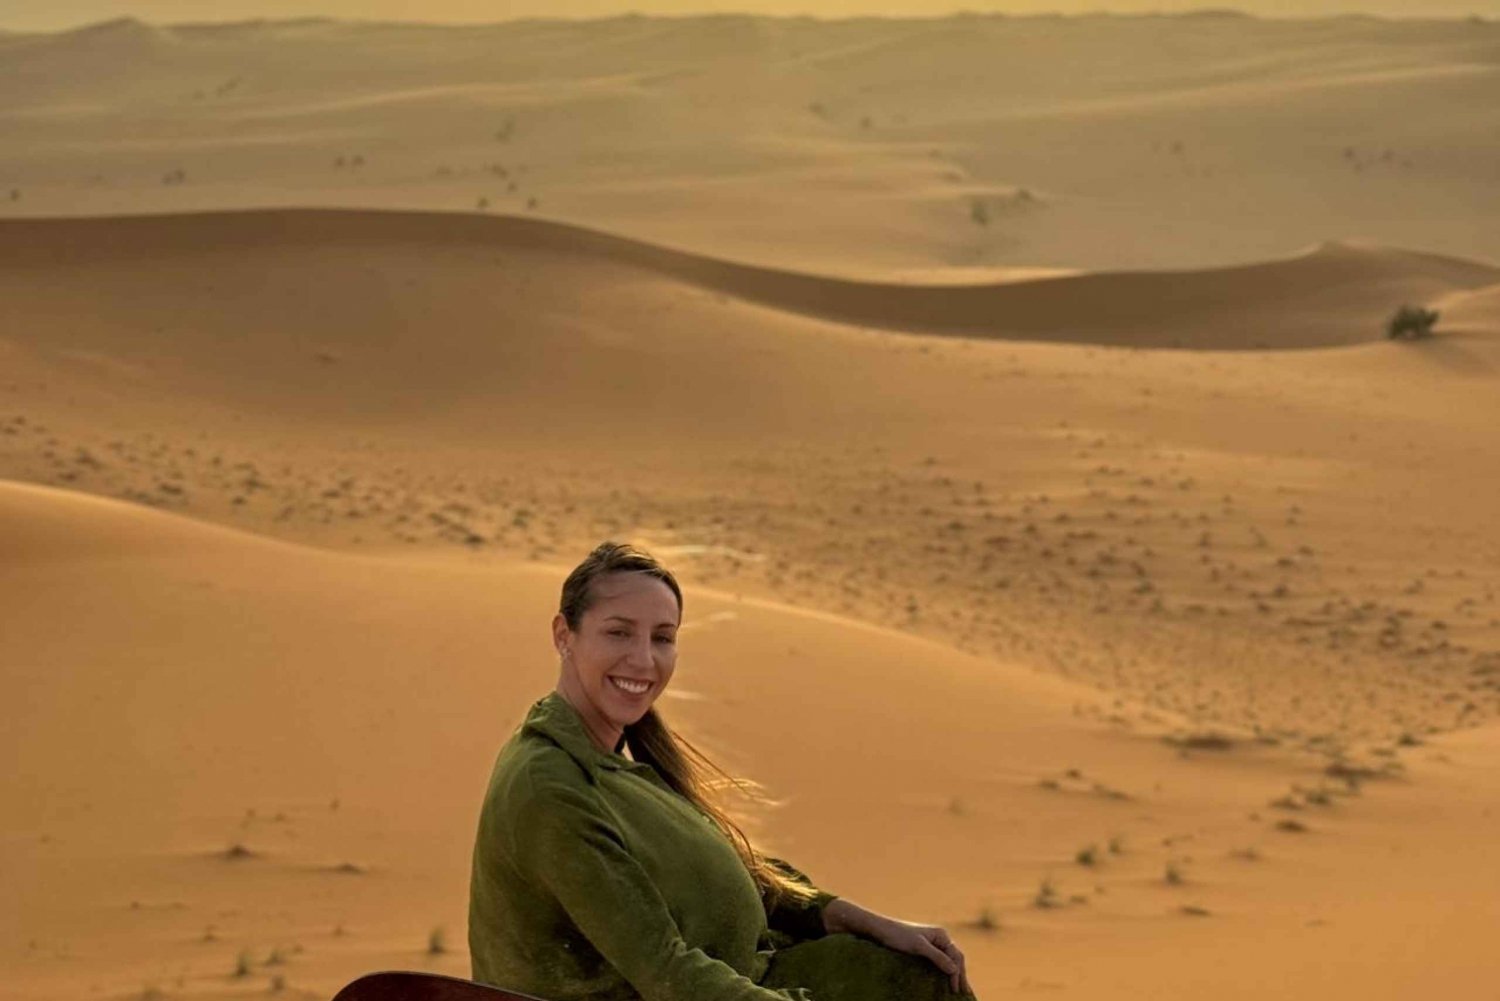 Riyadh: Red Sand Dunes and quad bike